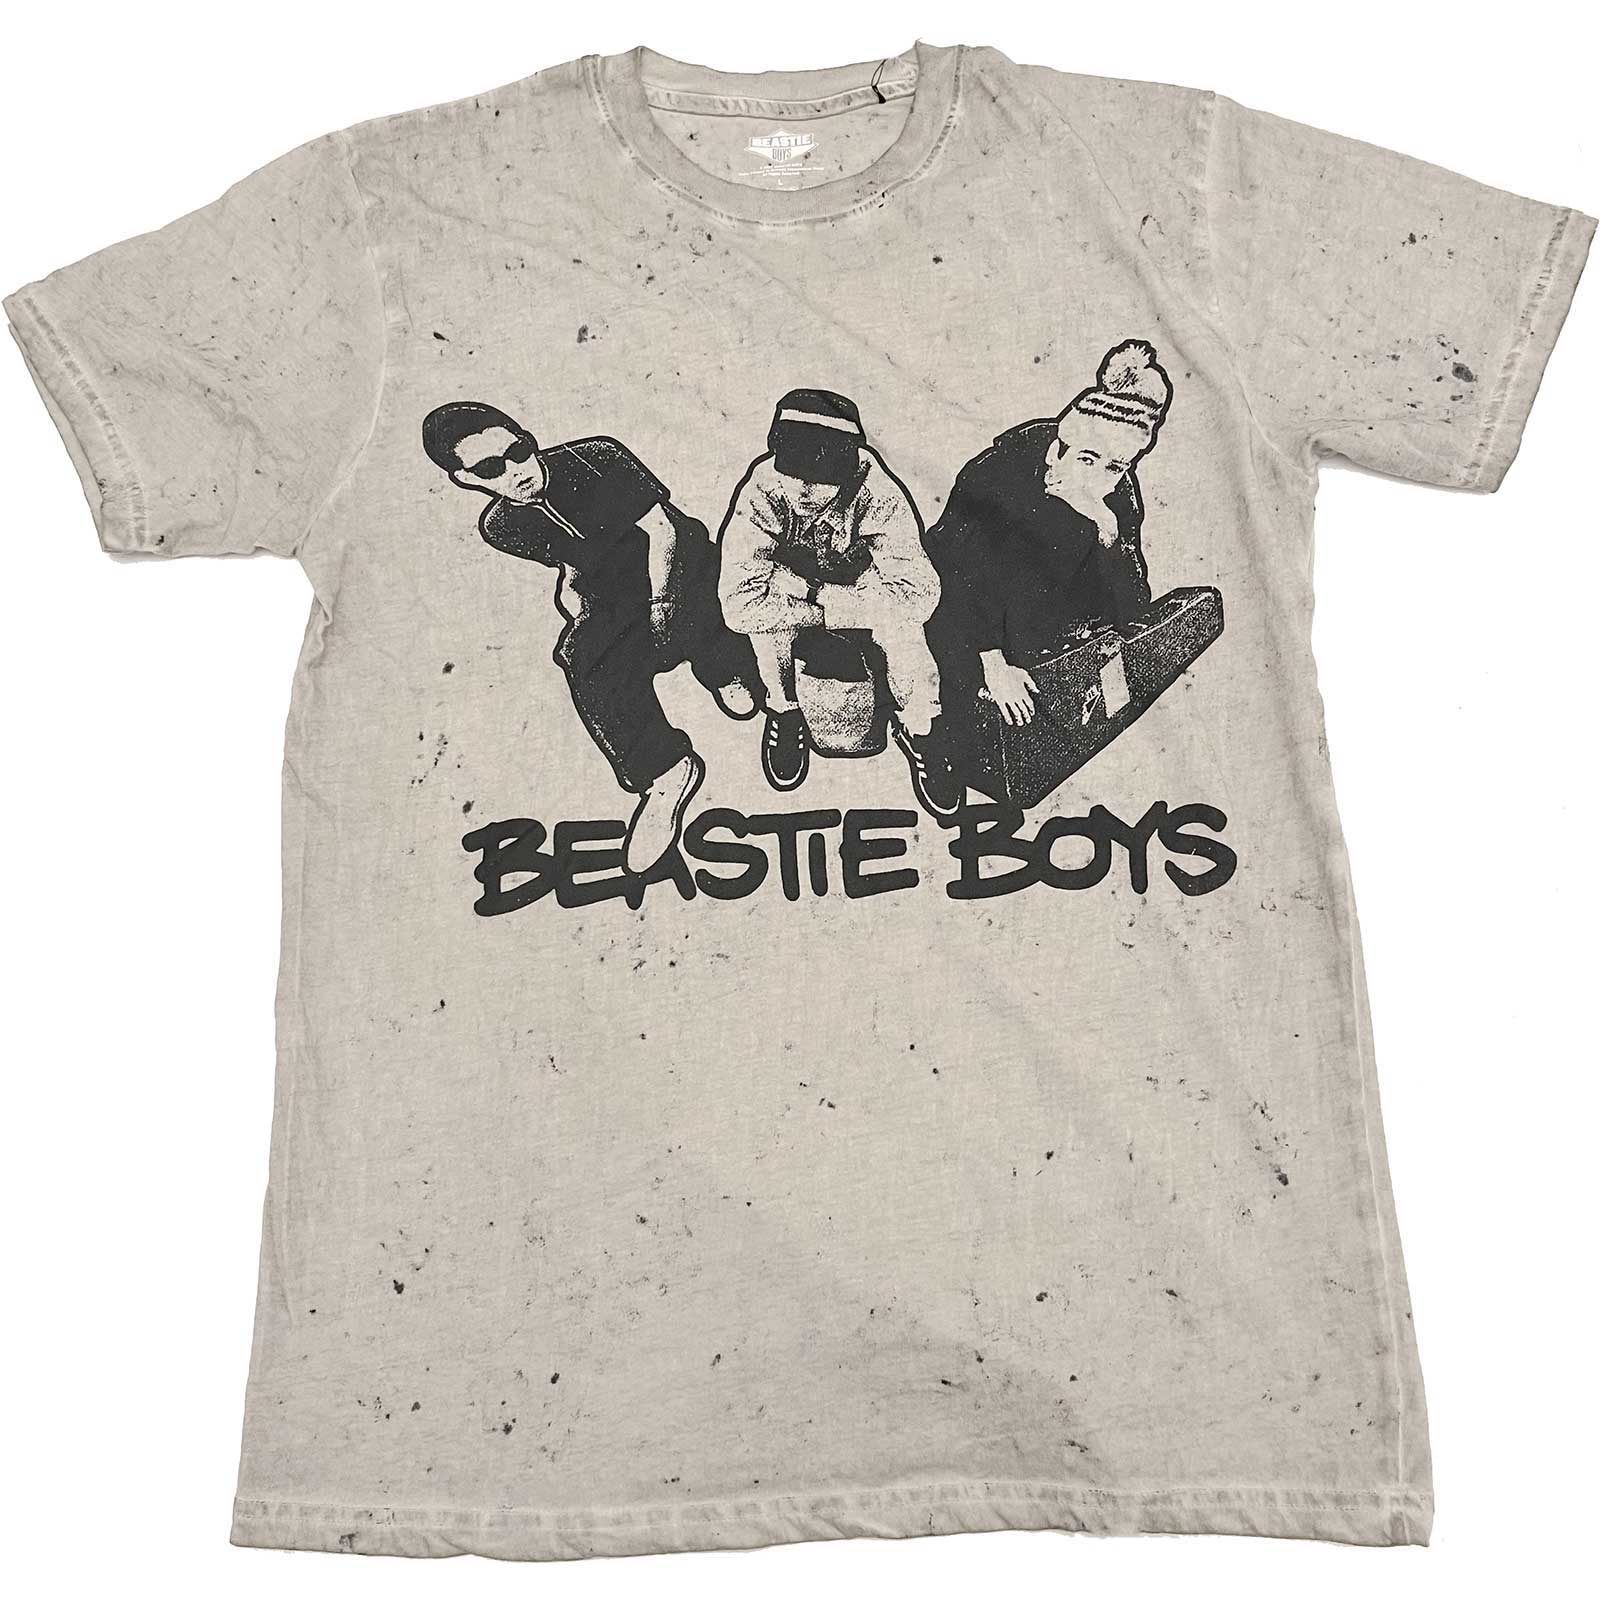 Beastie Boys Check Your Head Unisex Tee